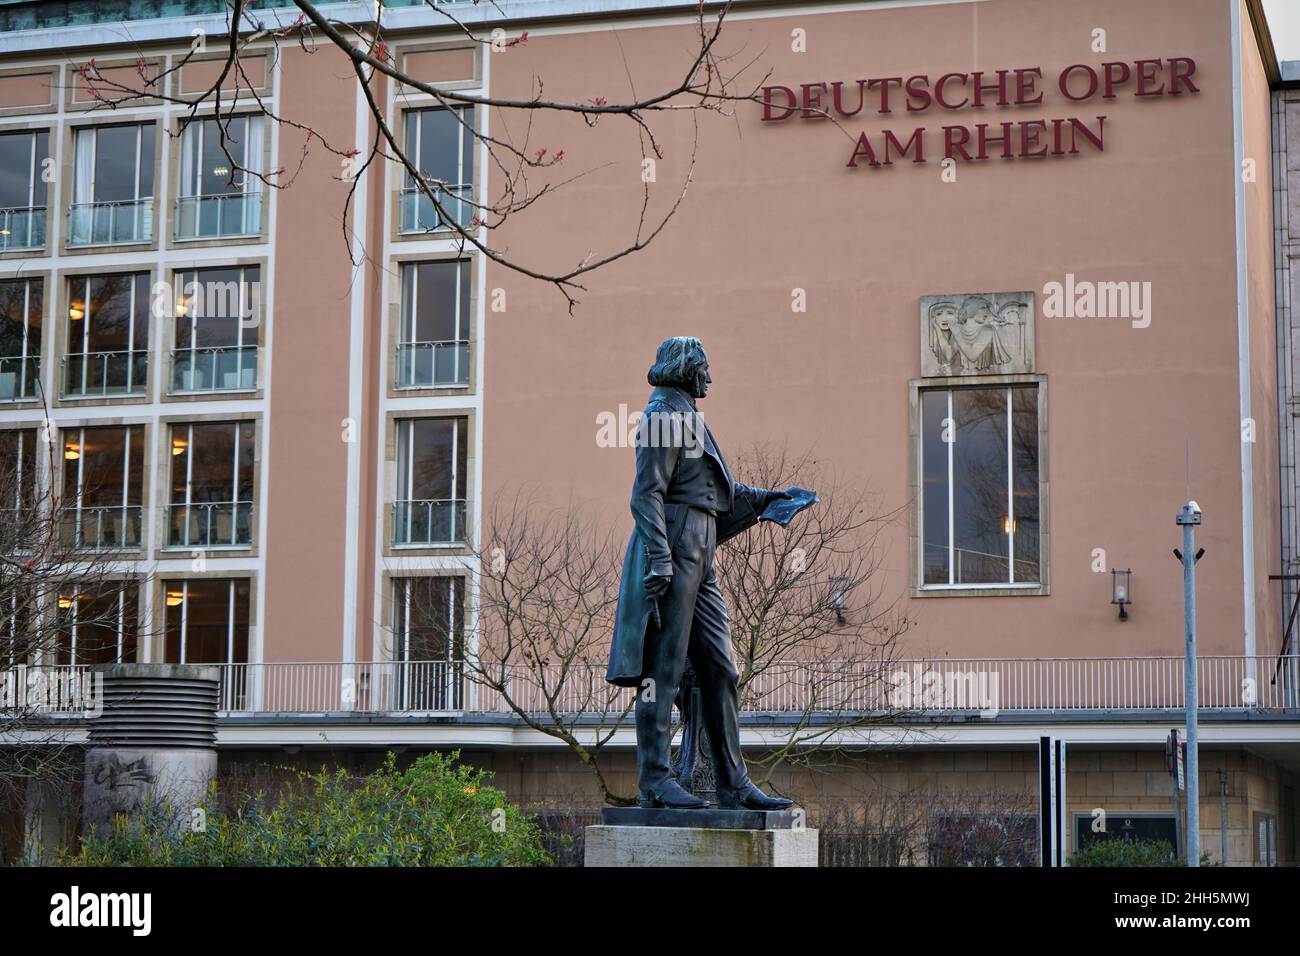 Statua in bronzo del compositore Felix Mendelsssohn Bartholdy, direttore musicale di Düsseldorf dal 1833 al 1835, di fronte alla Deutsche Oper am Rhein. Foto Stock